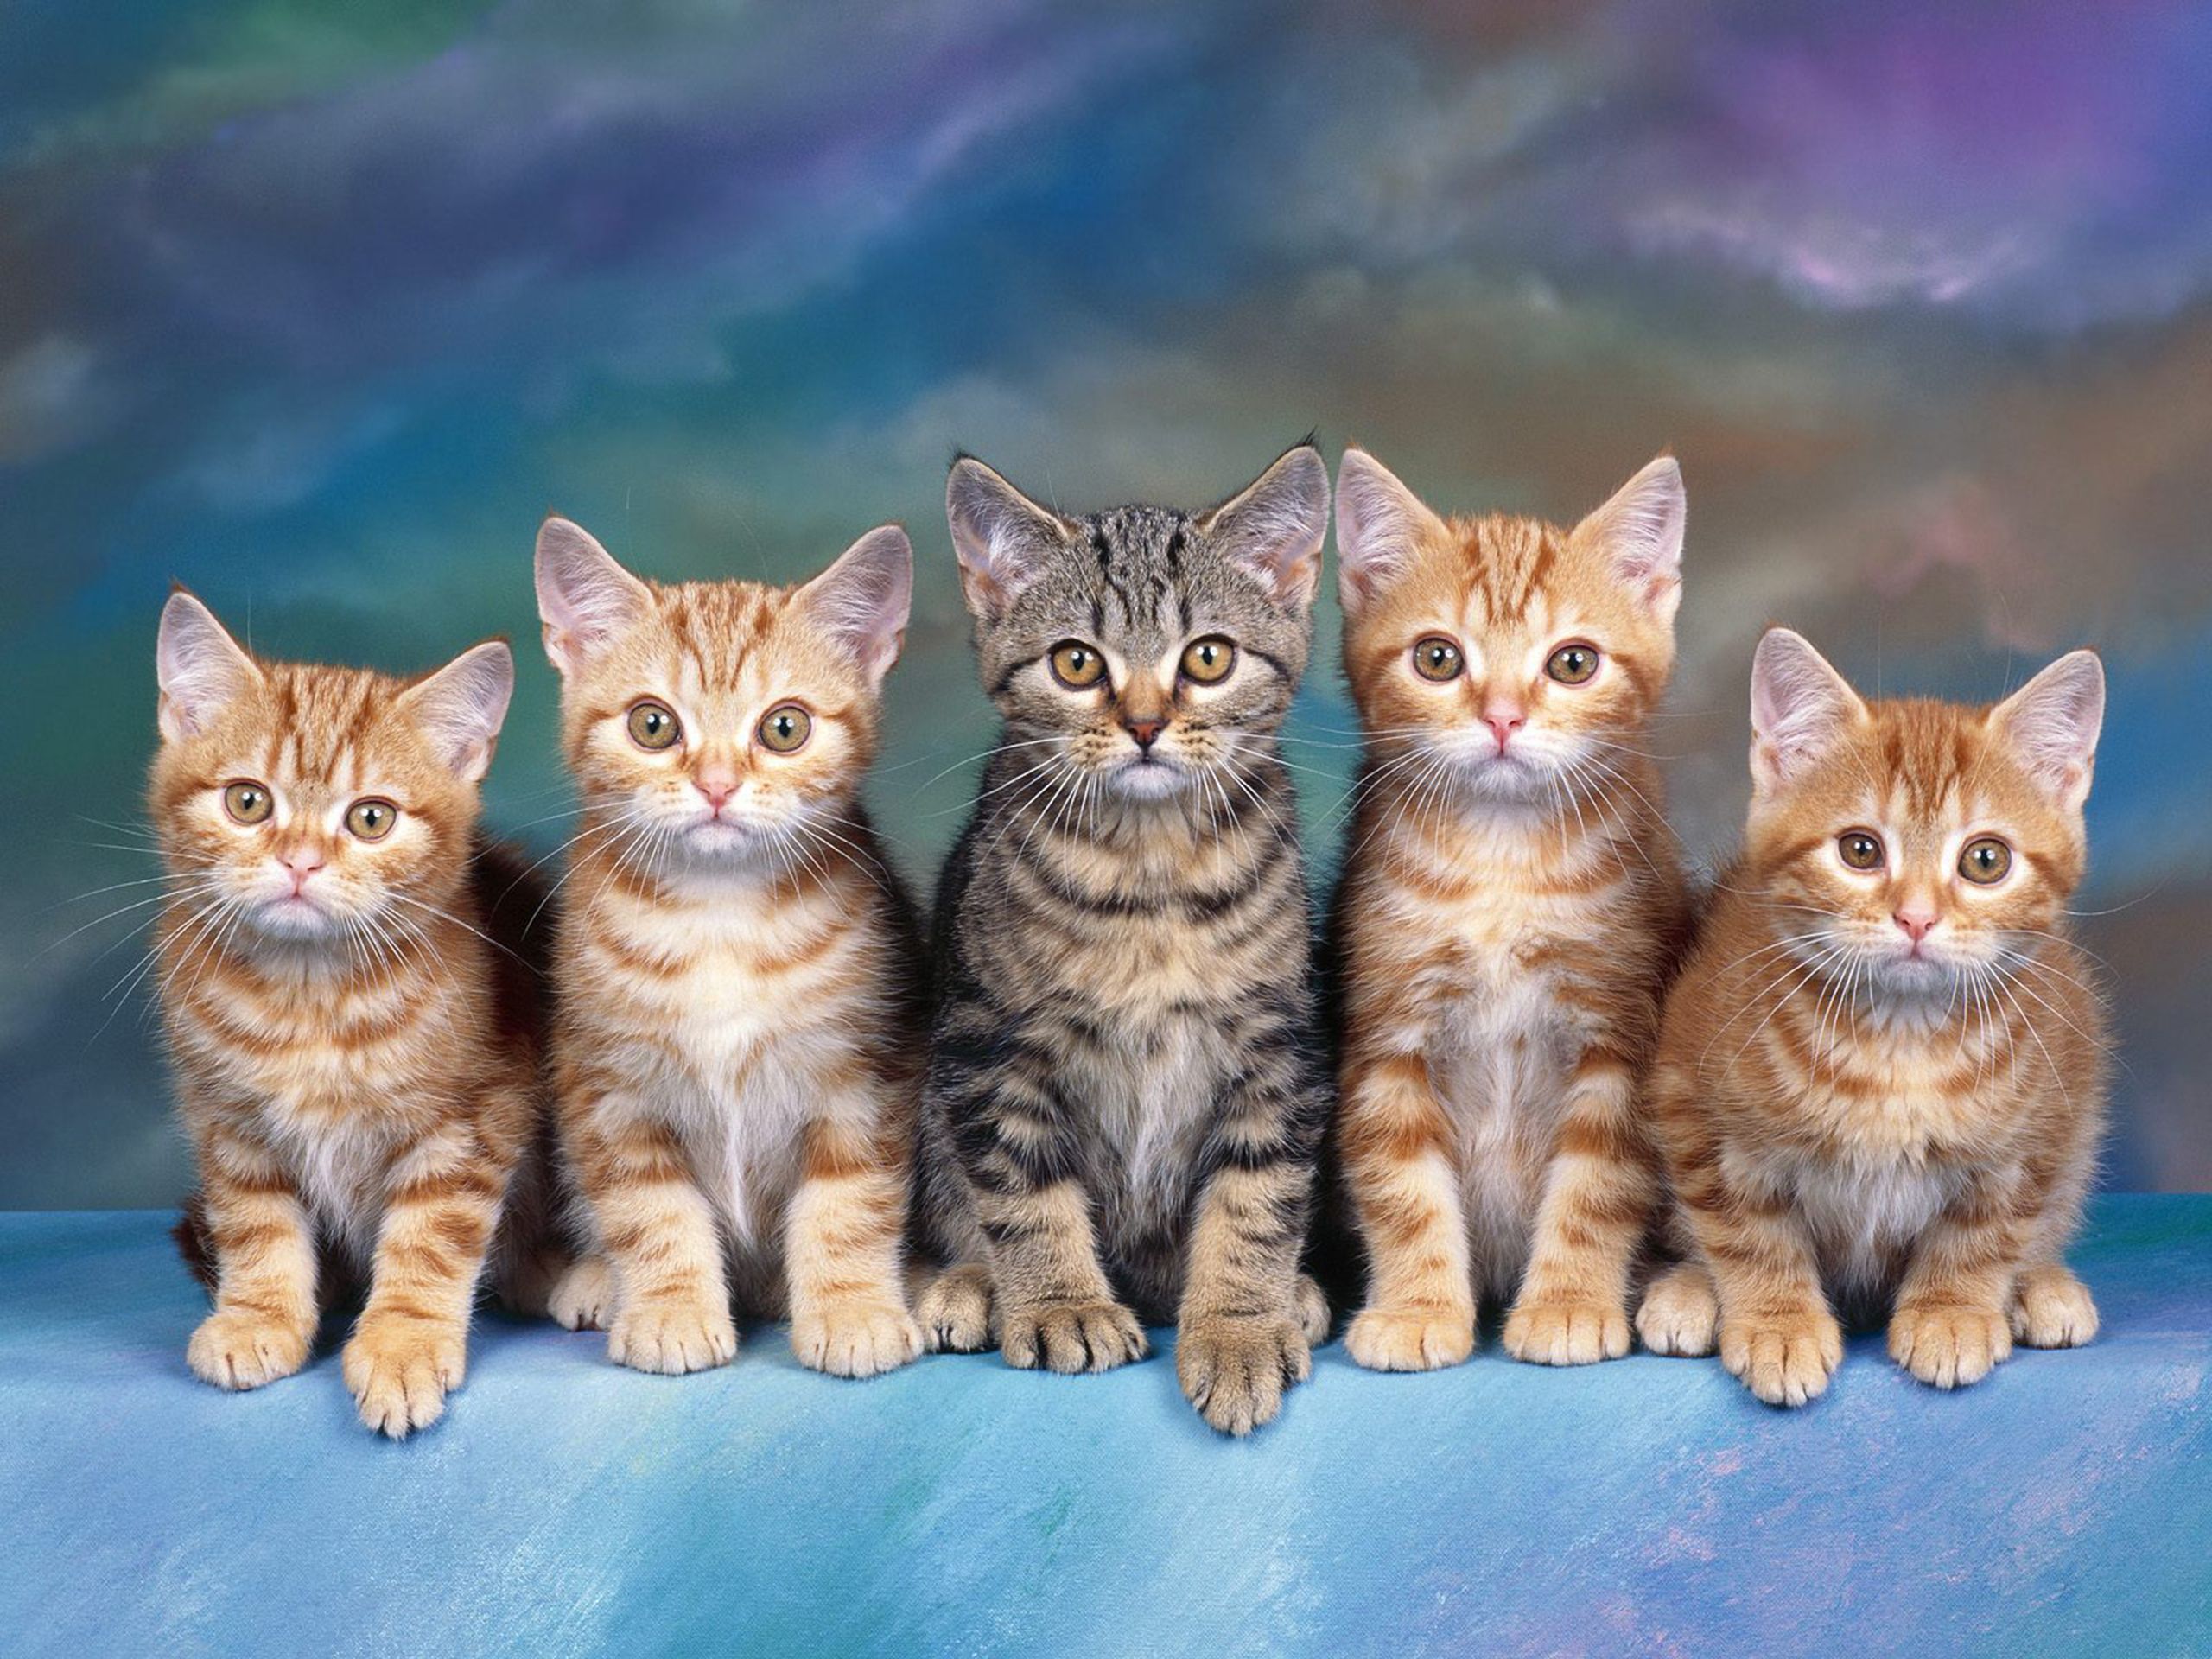 Double Cat Wallpaper. Wallpaper, Background, Image, Art Photo. Kittens cutest, Cute cat wallpaper, Cats